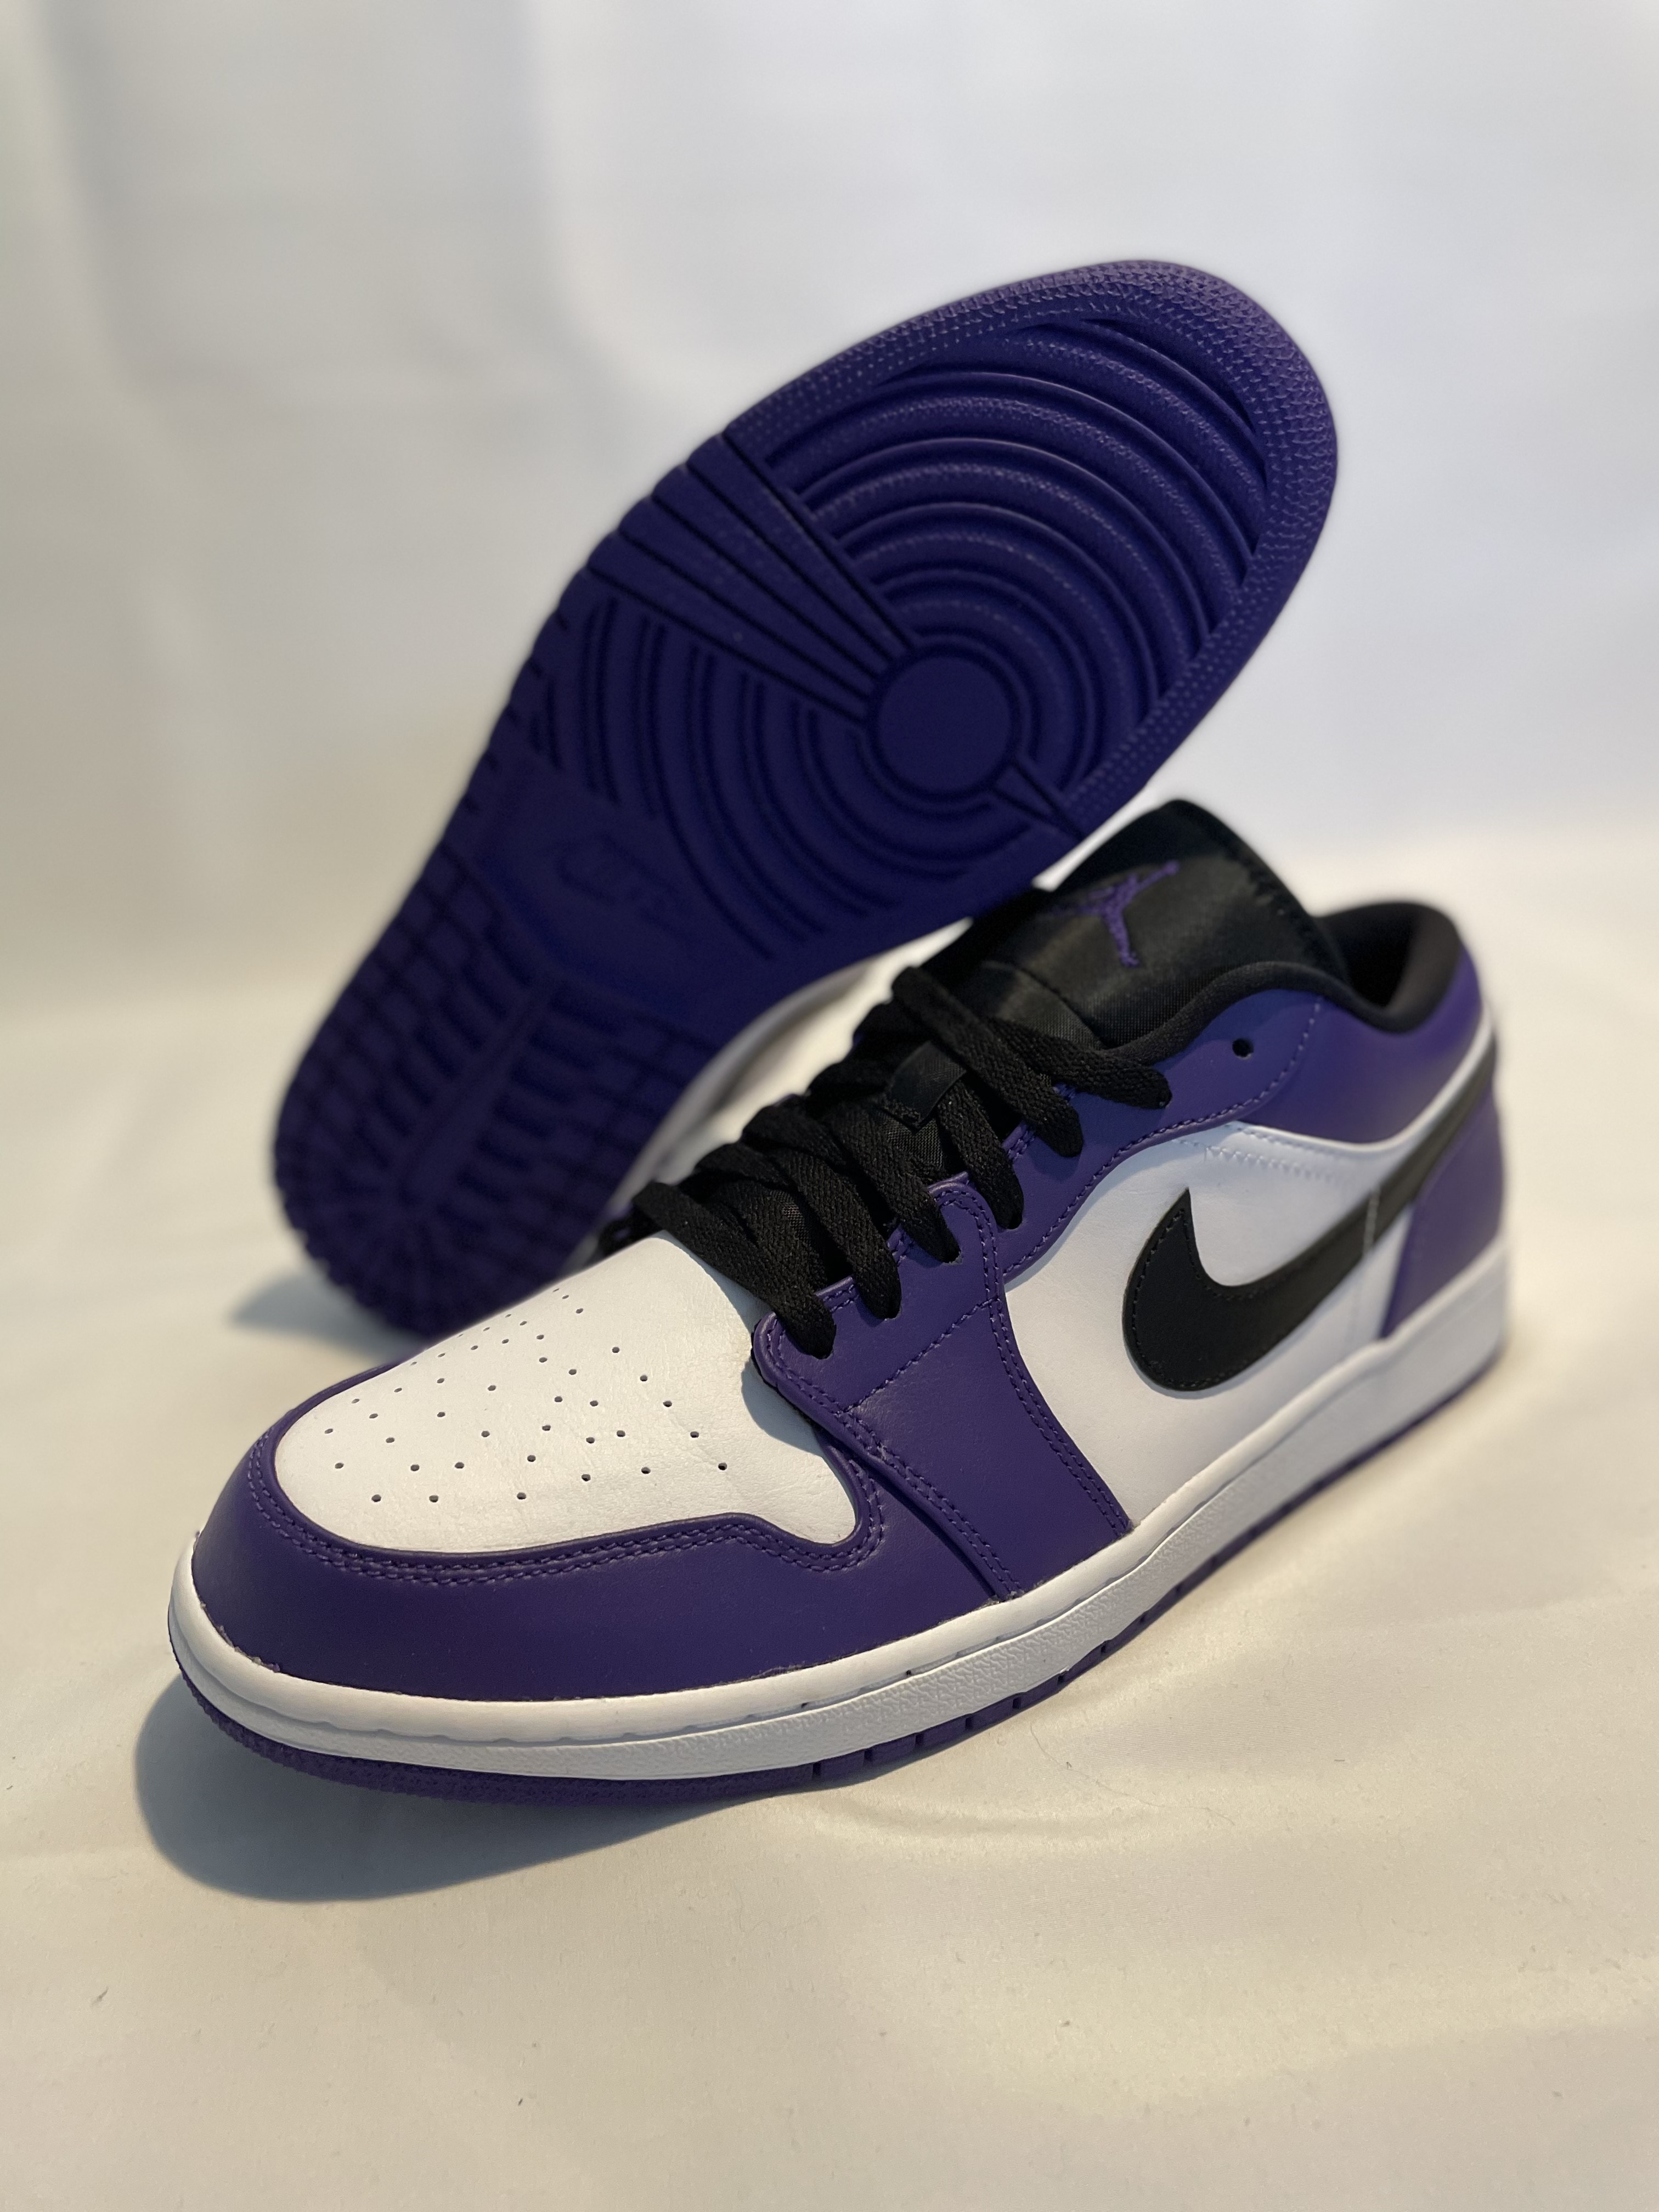 Jordan 1 low ‘court purple’ - 4